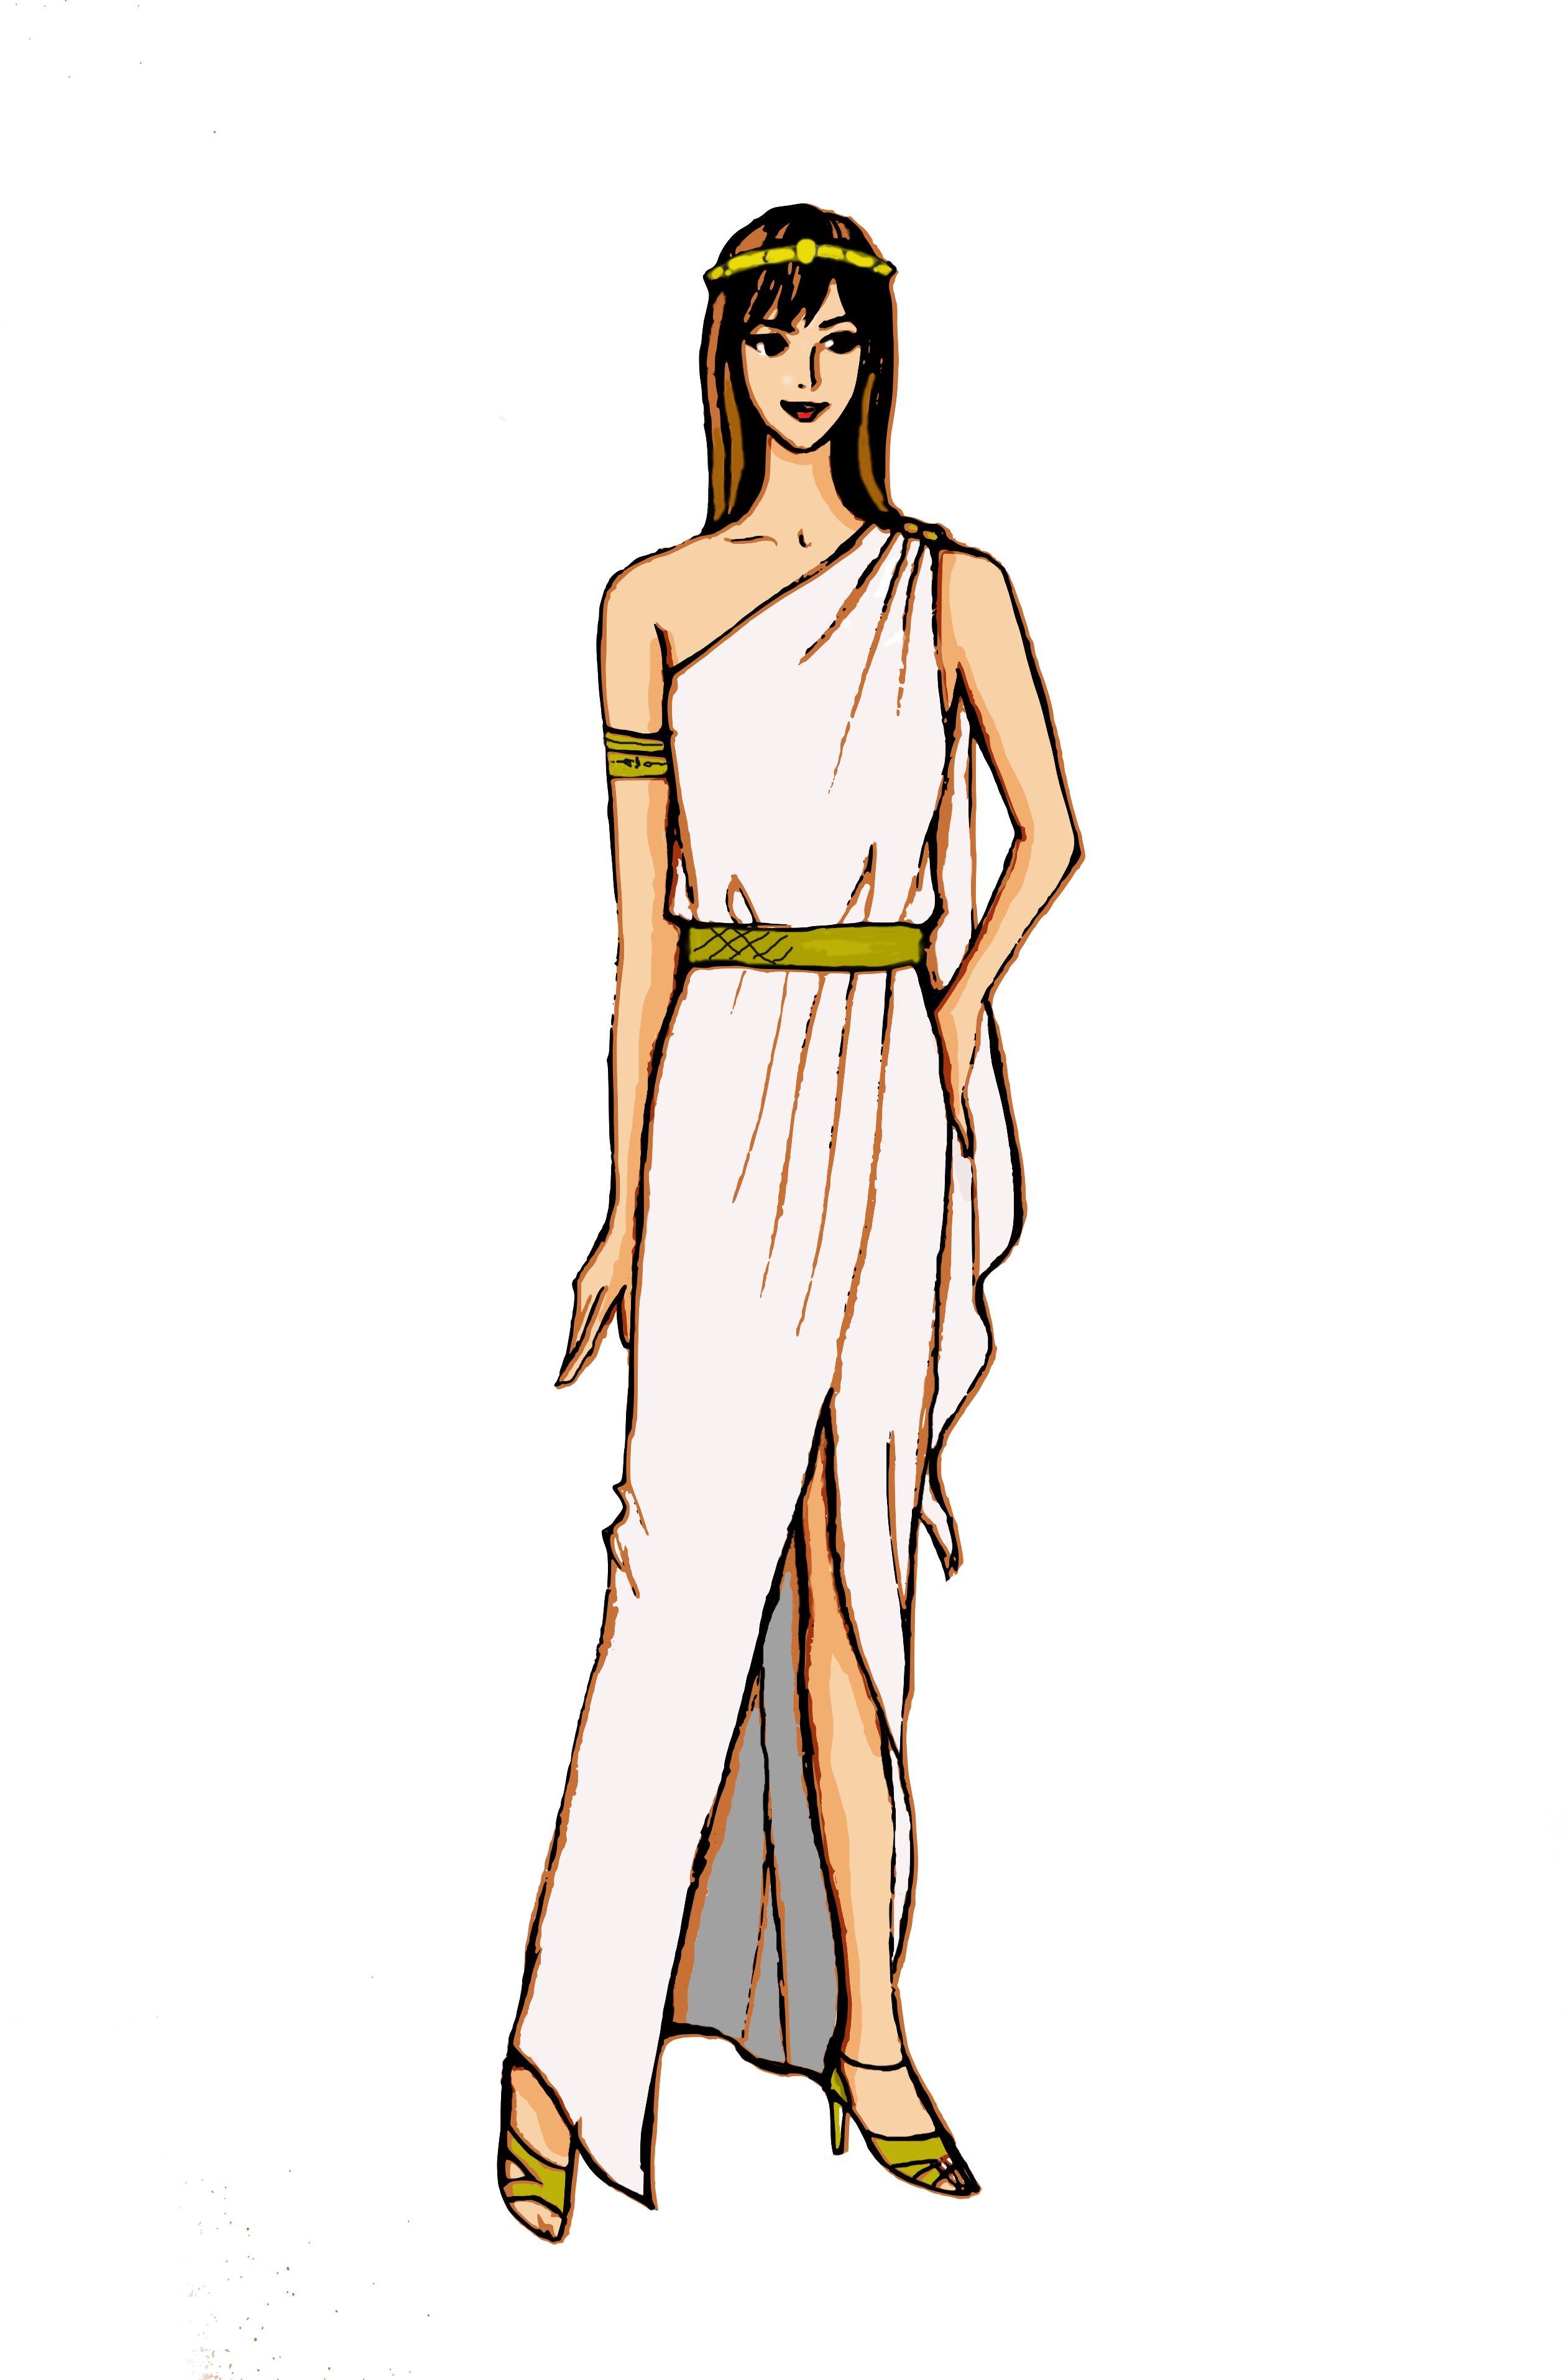 Одежда древних греков